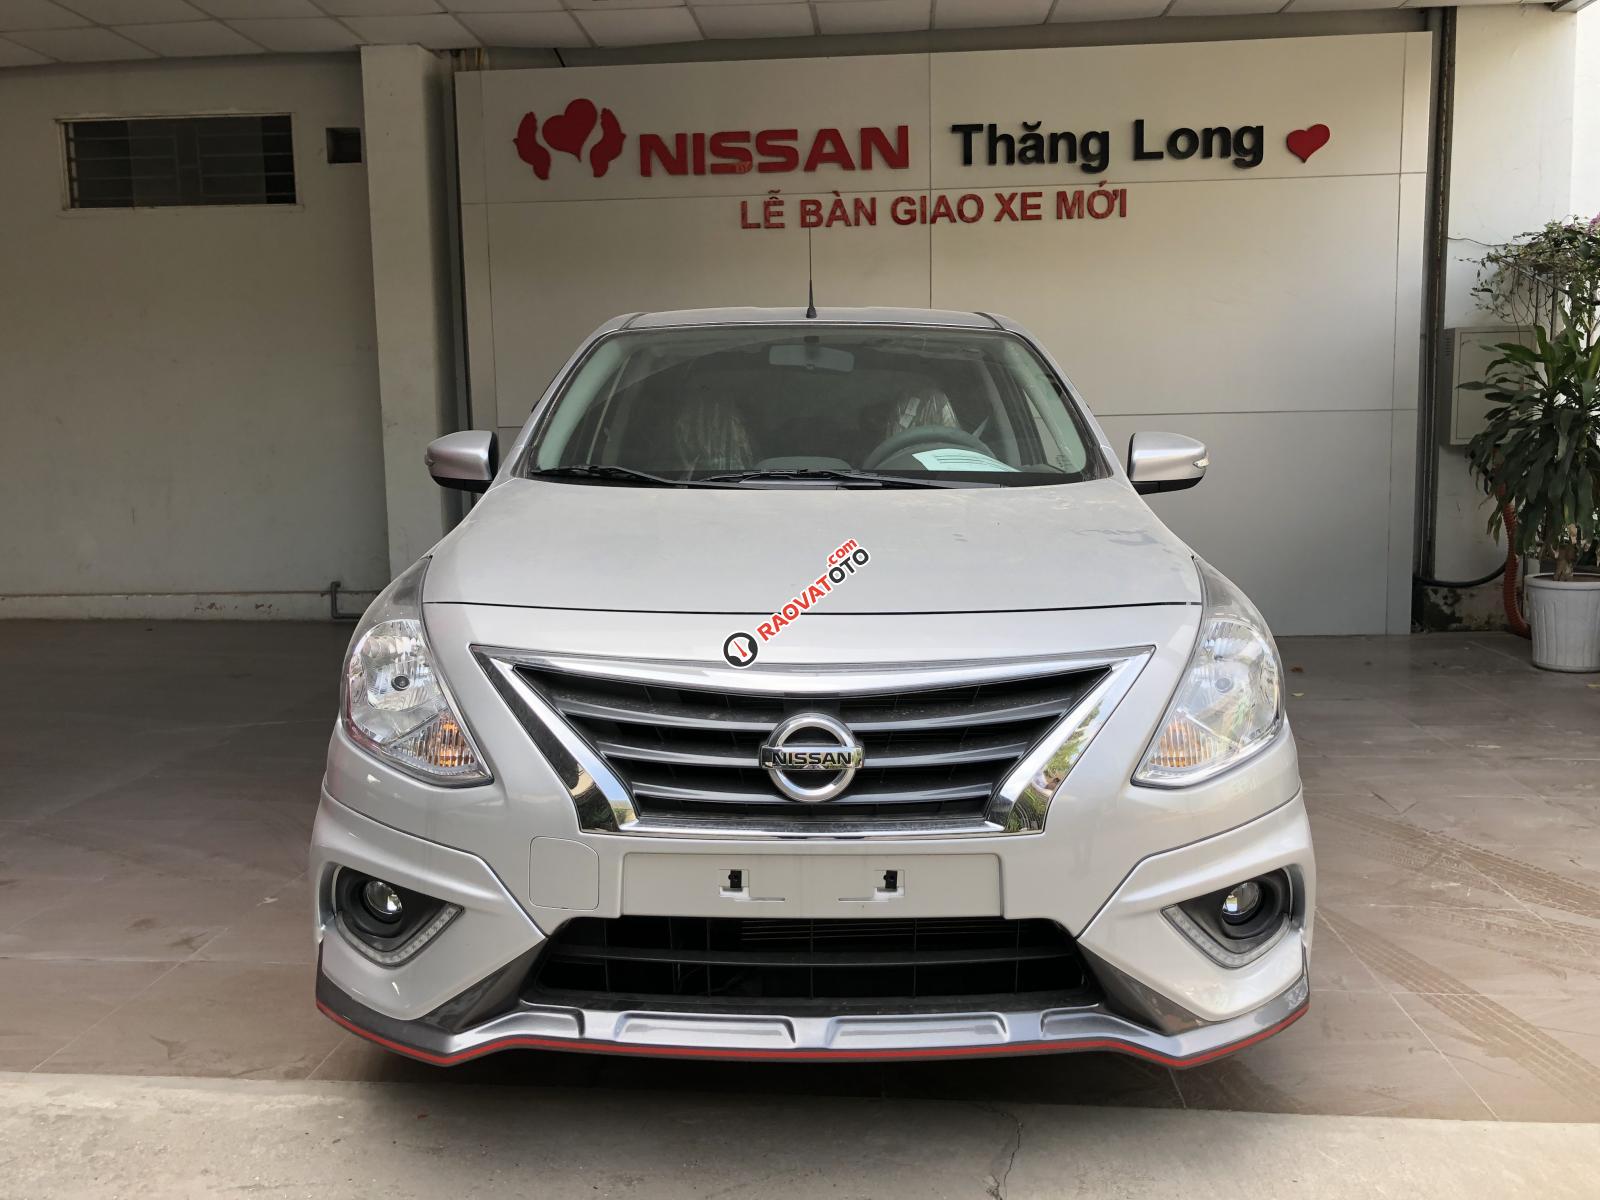 Nissan Sunny 2019, chỉ từ 450tr, có xe giao ngay. LH: 0366.470.930-0